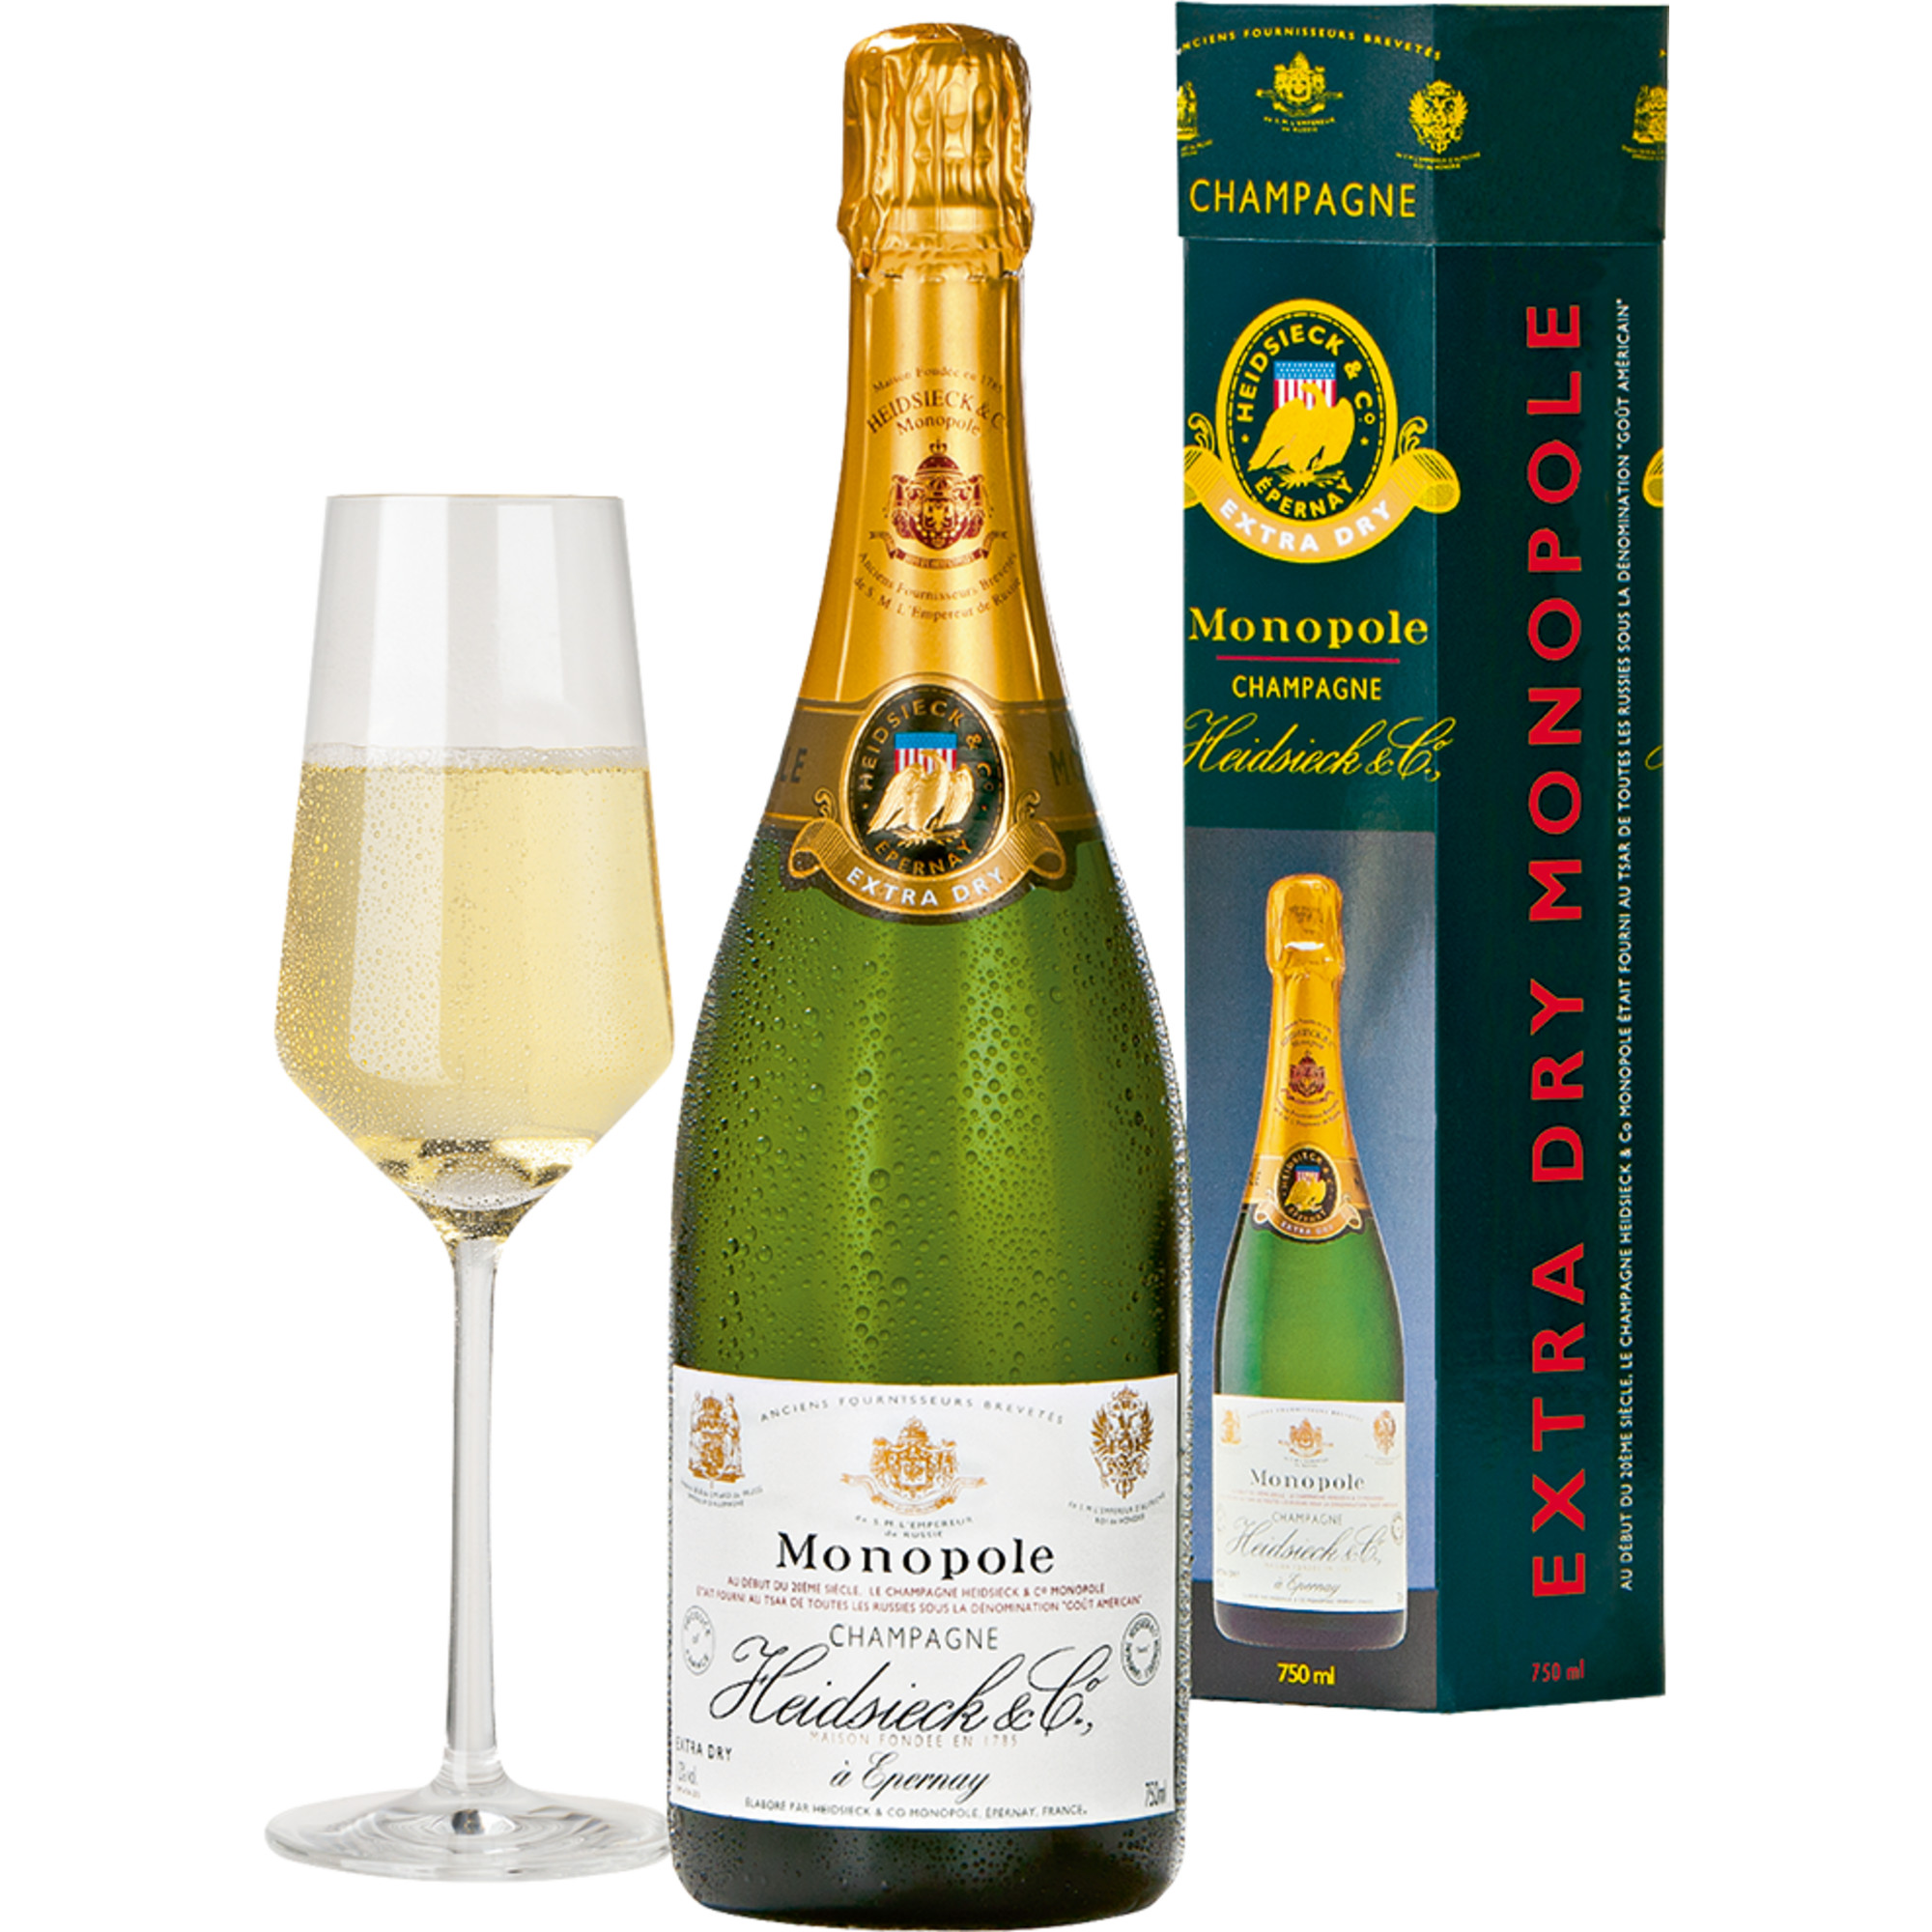 Champagne Heidsieck Monopole, Extra Dry, Champagne AC, Geschenketui, Champagne, Präsente Heidsieck Monopole & Co., 51100 Reims, France Hawesko DE